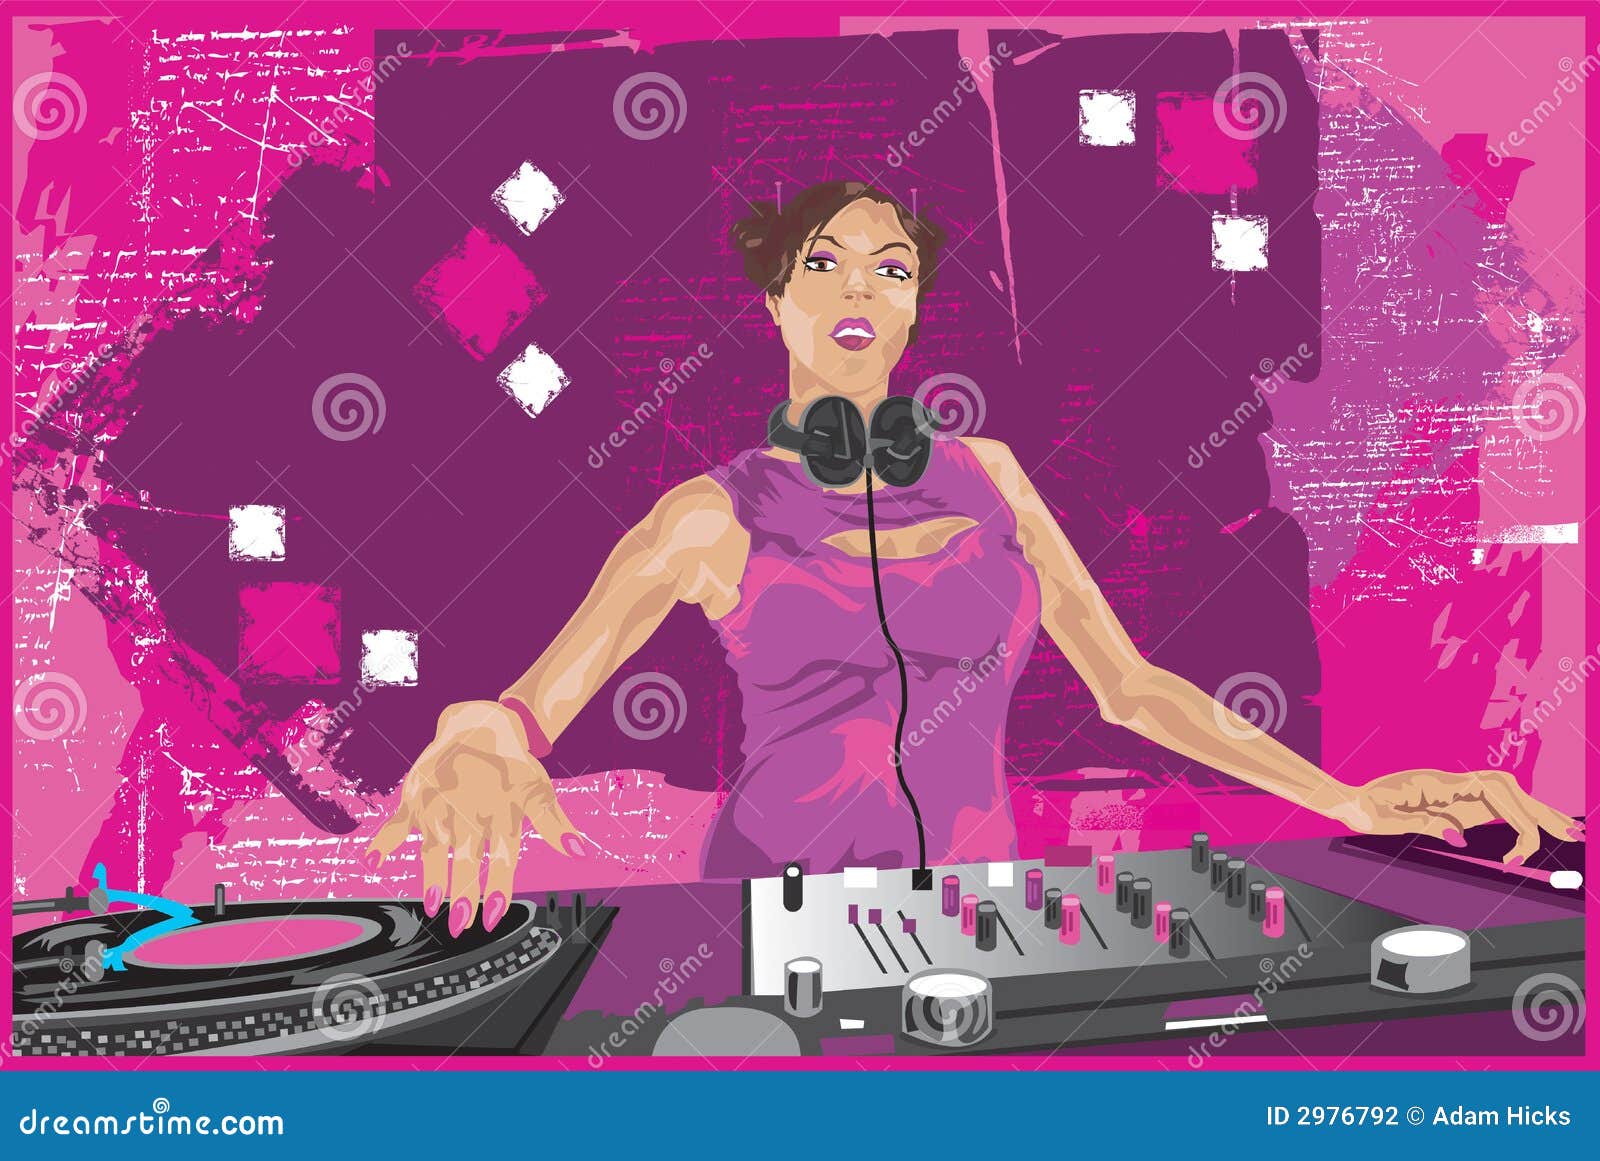 DJ Girl Mixing It Up 2 stock vector. Image of artwork - 2976792